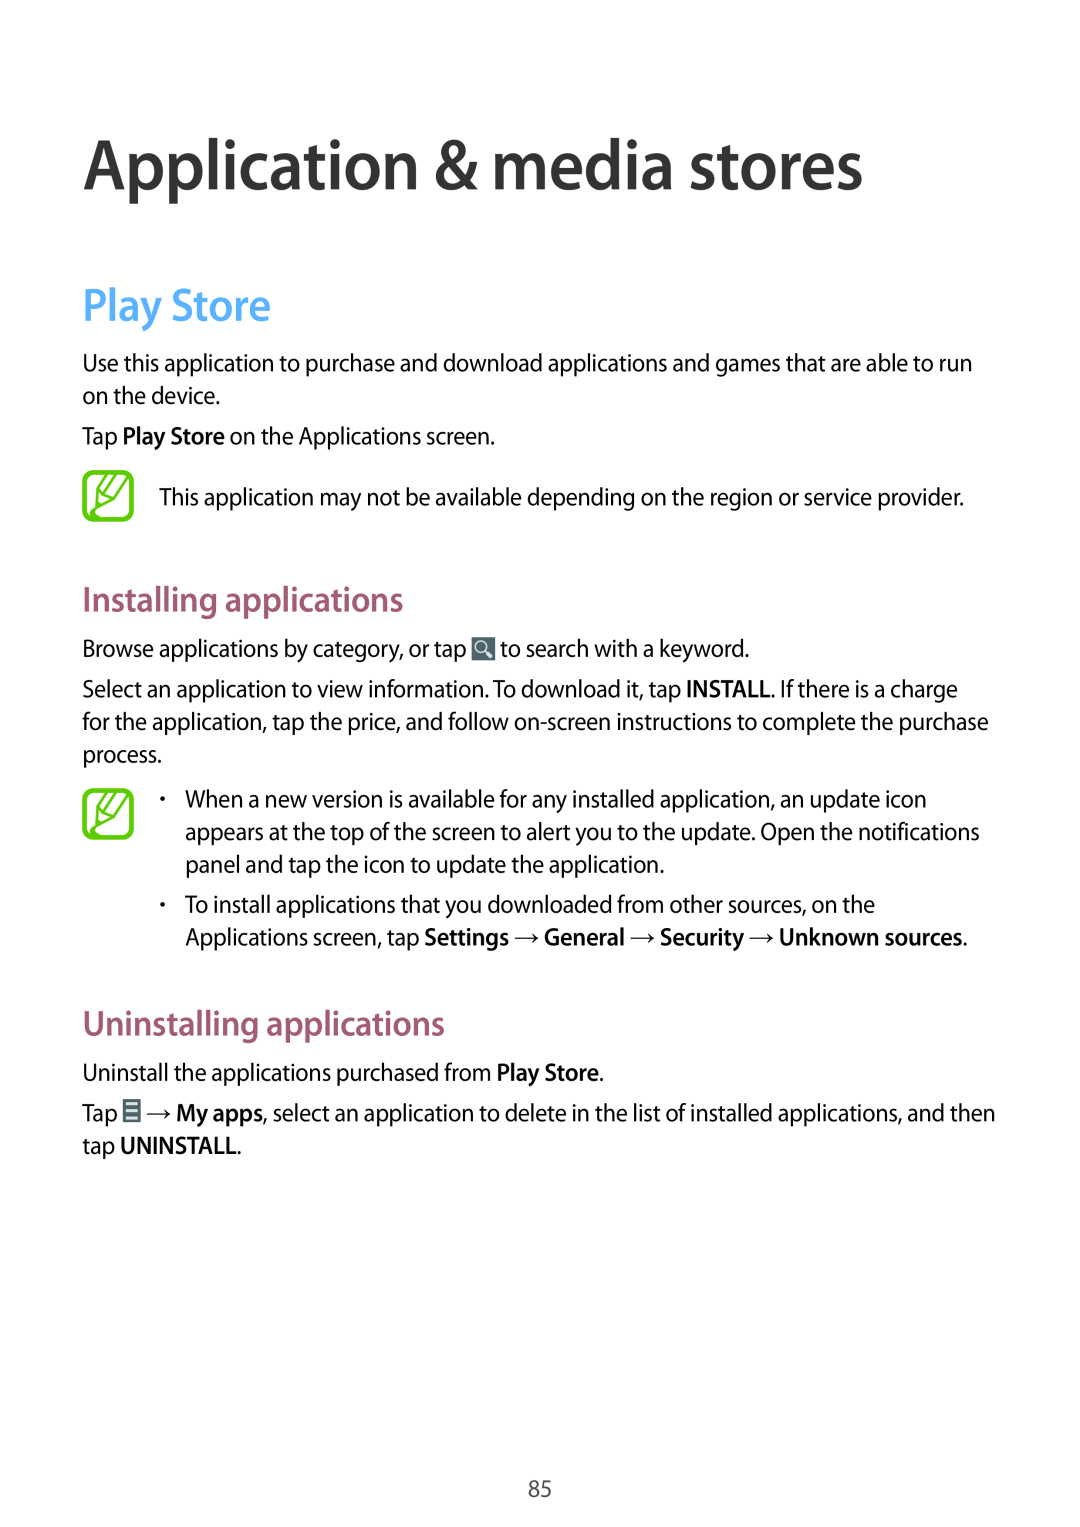 Samsung SM-G7102ZWAACR manual Application & media stores, Play Store, Installing applications, Uninstalling applications 